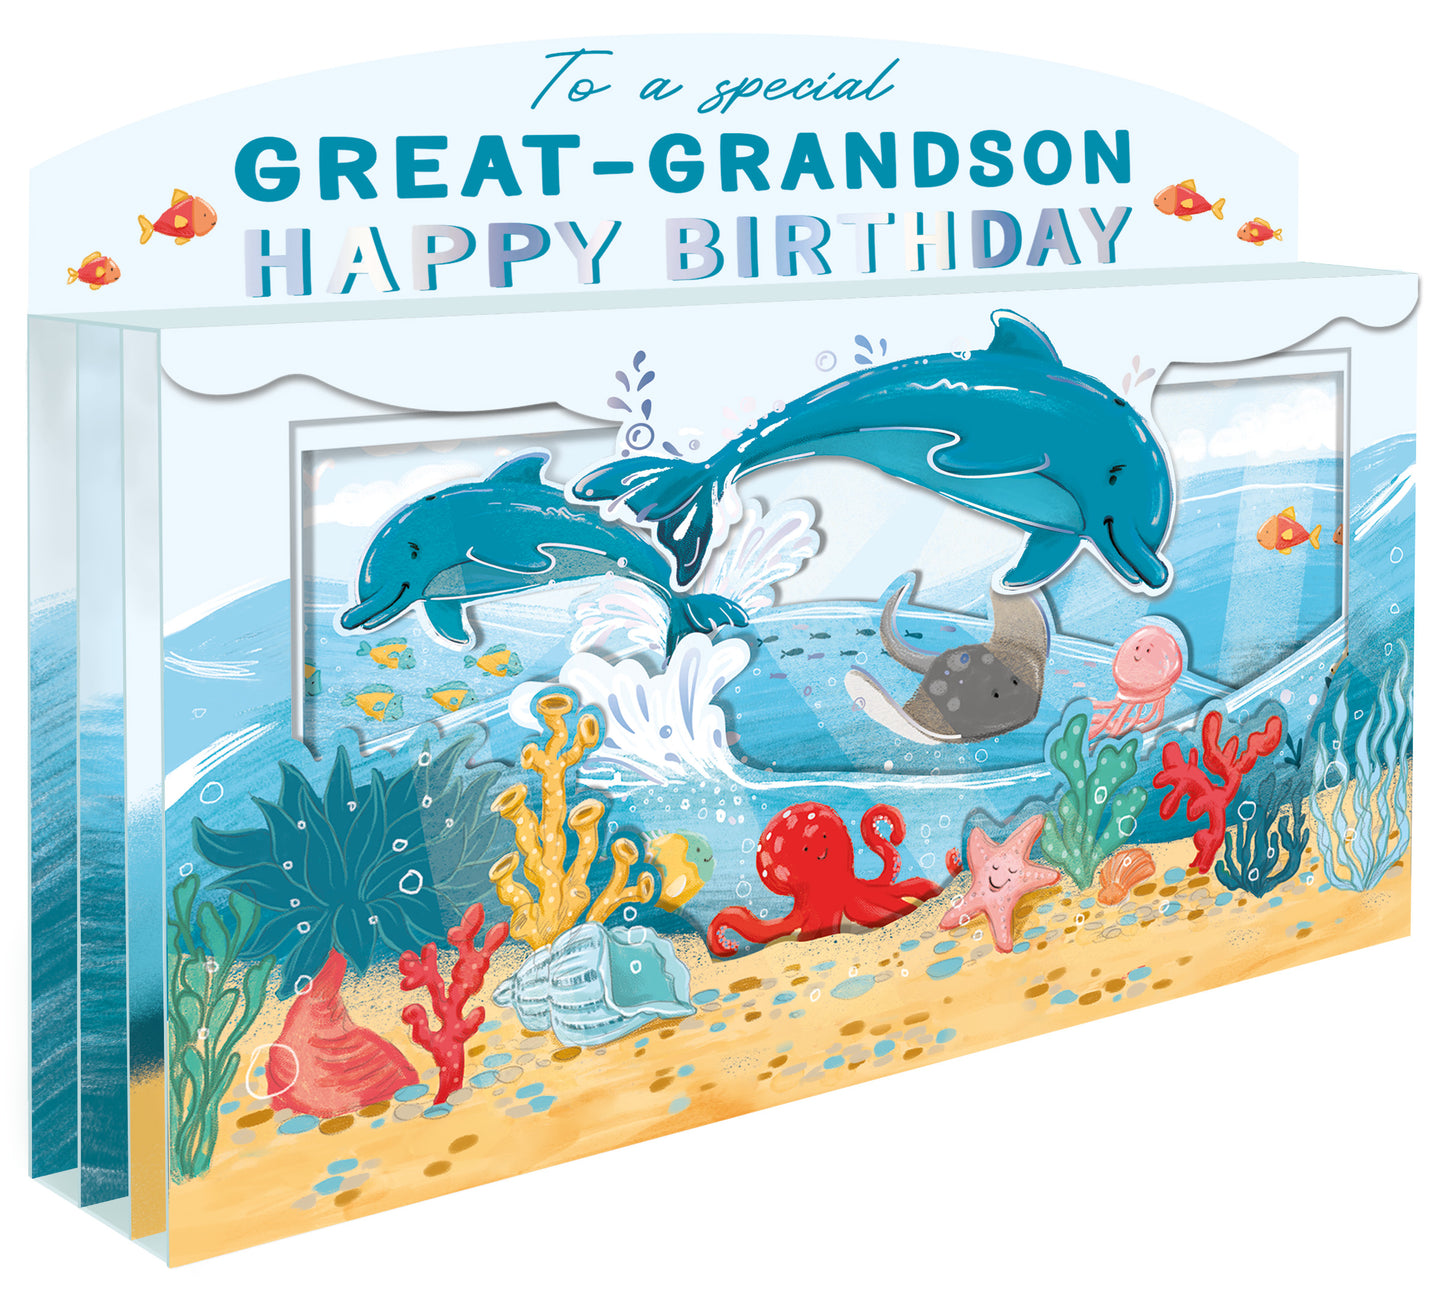 Spectacular 3D Under The Sea Great-Grandson Birthday Card